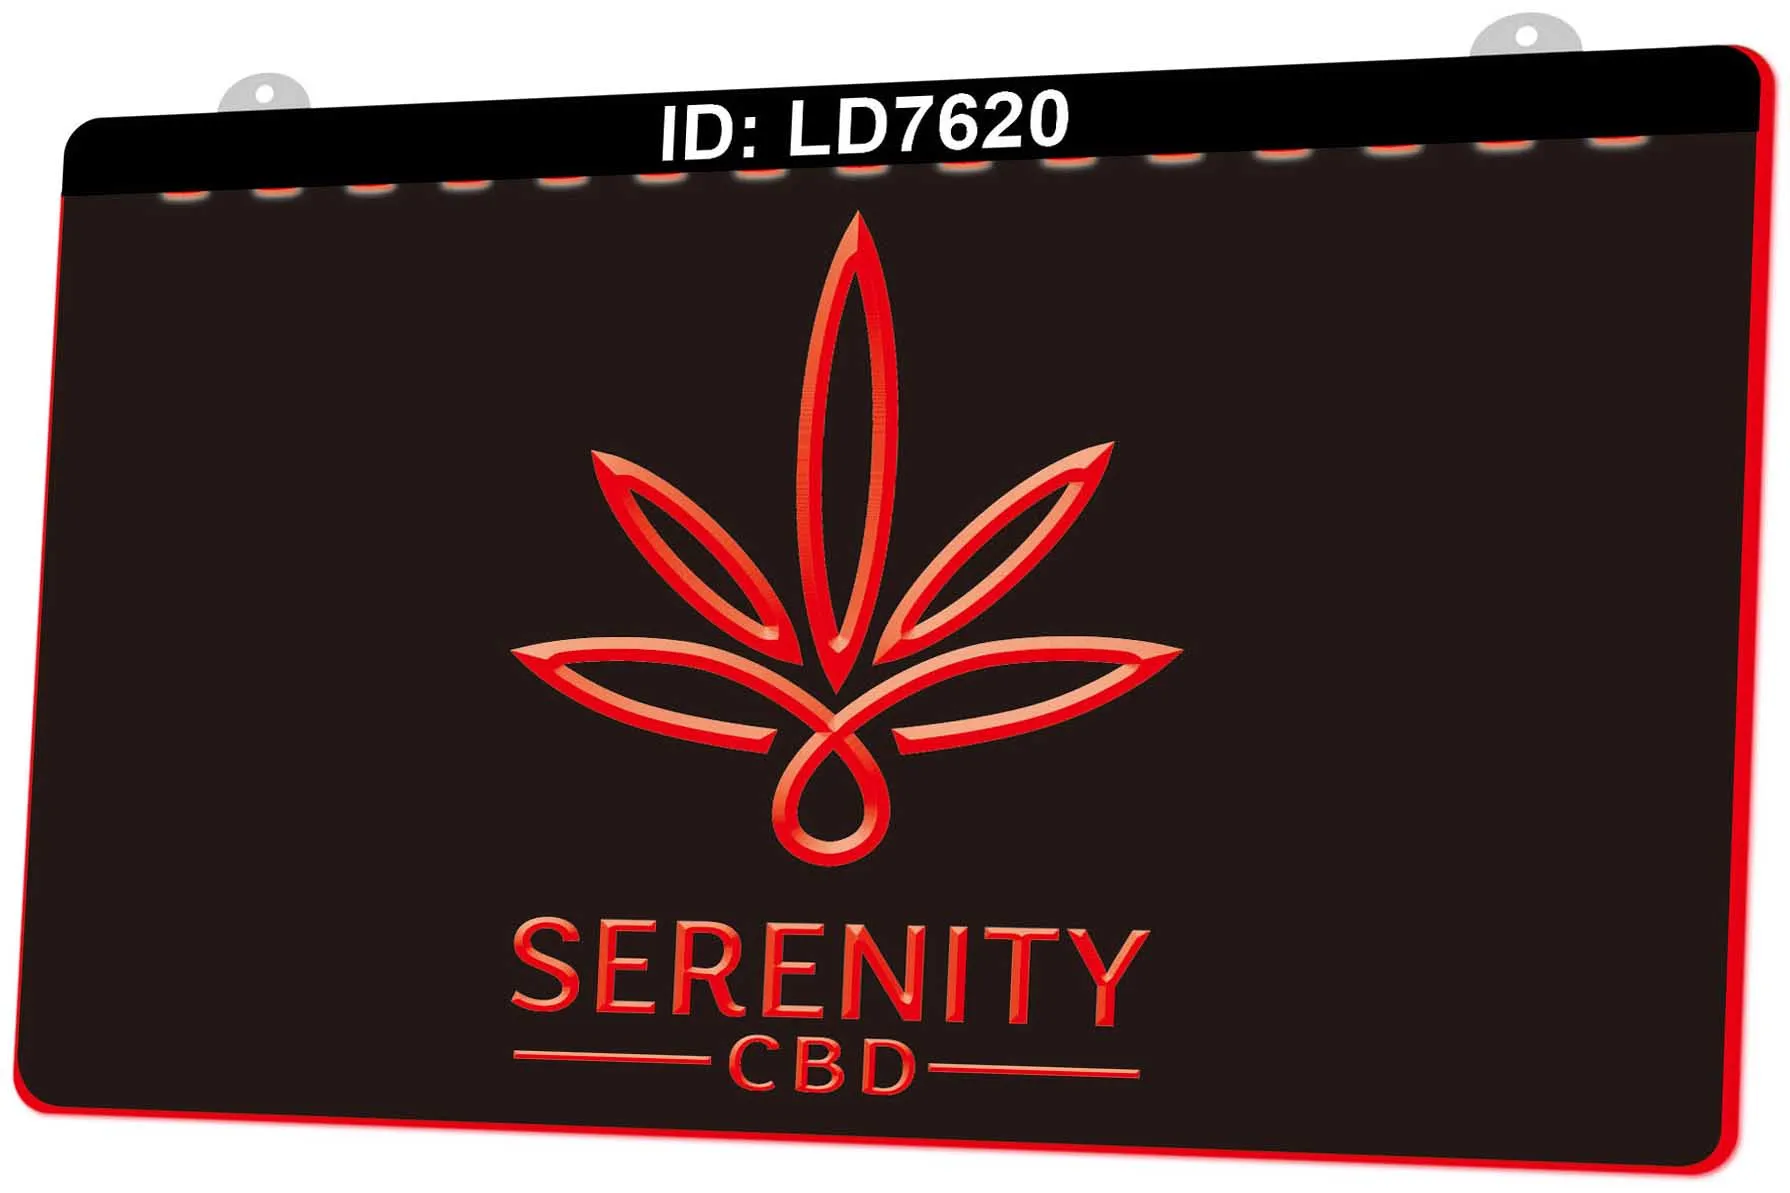 LD7620 Serenity CBD Oil 3D Engraving LED Light Sign Wholesale Retail